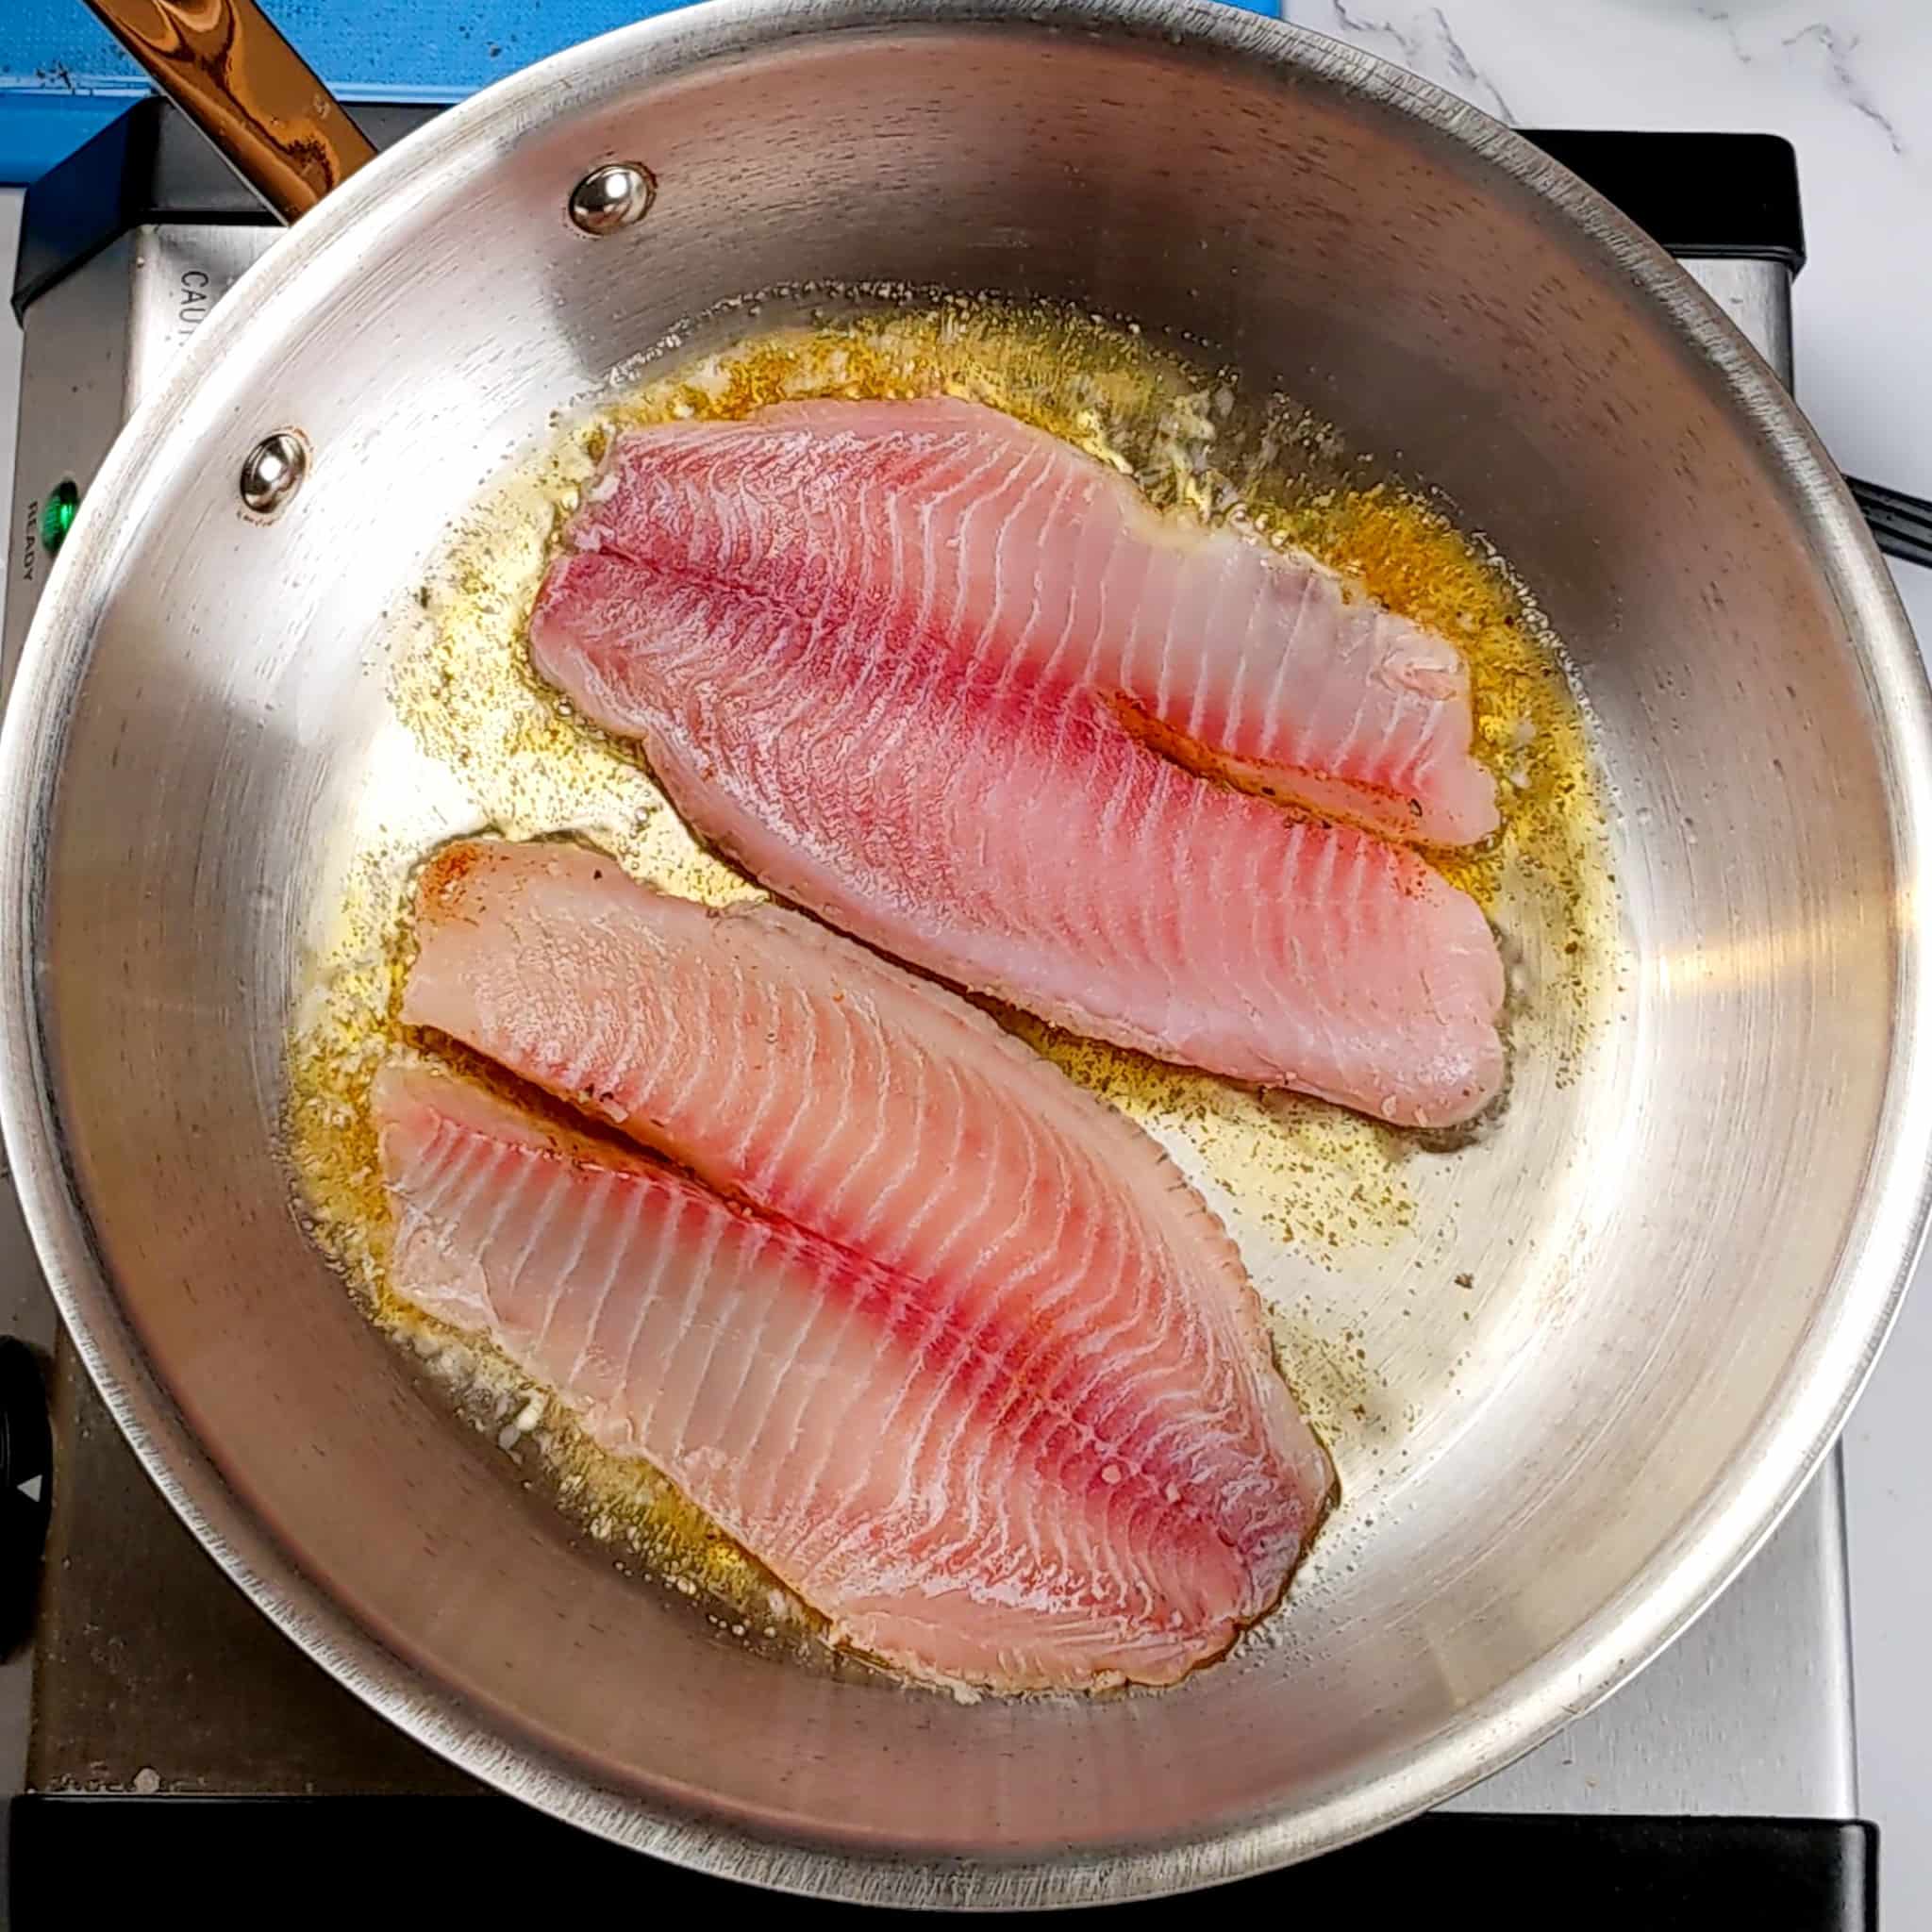 two tilapia filets season side down searing in an stainless steel frying pan.